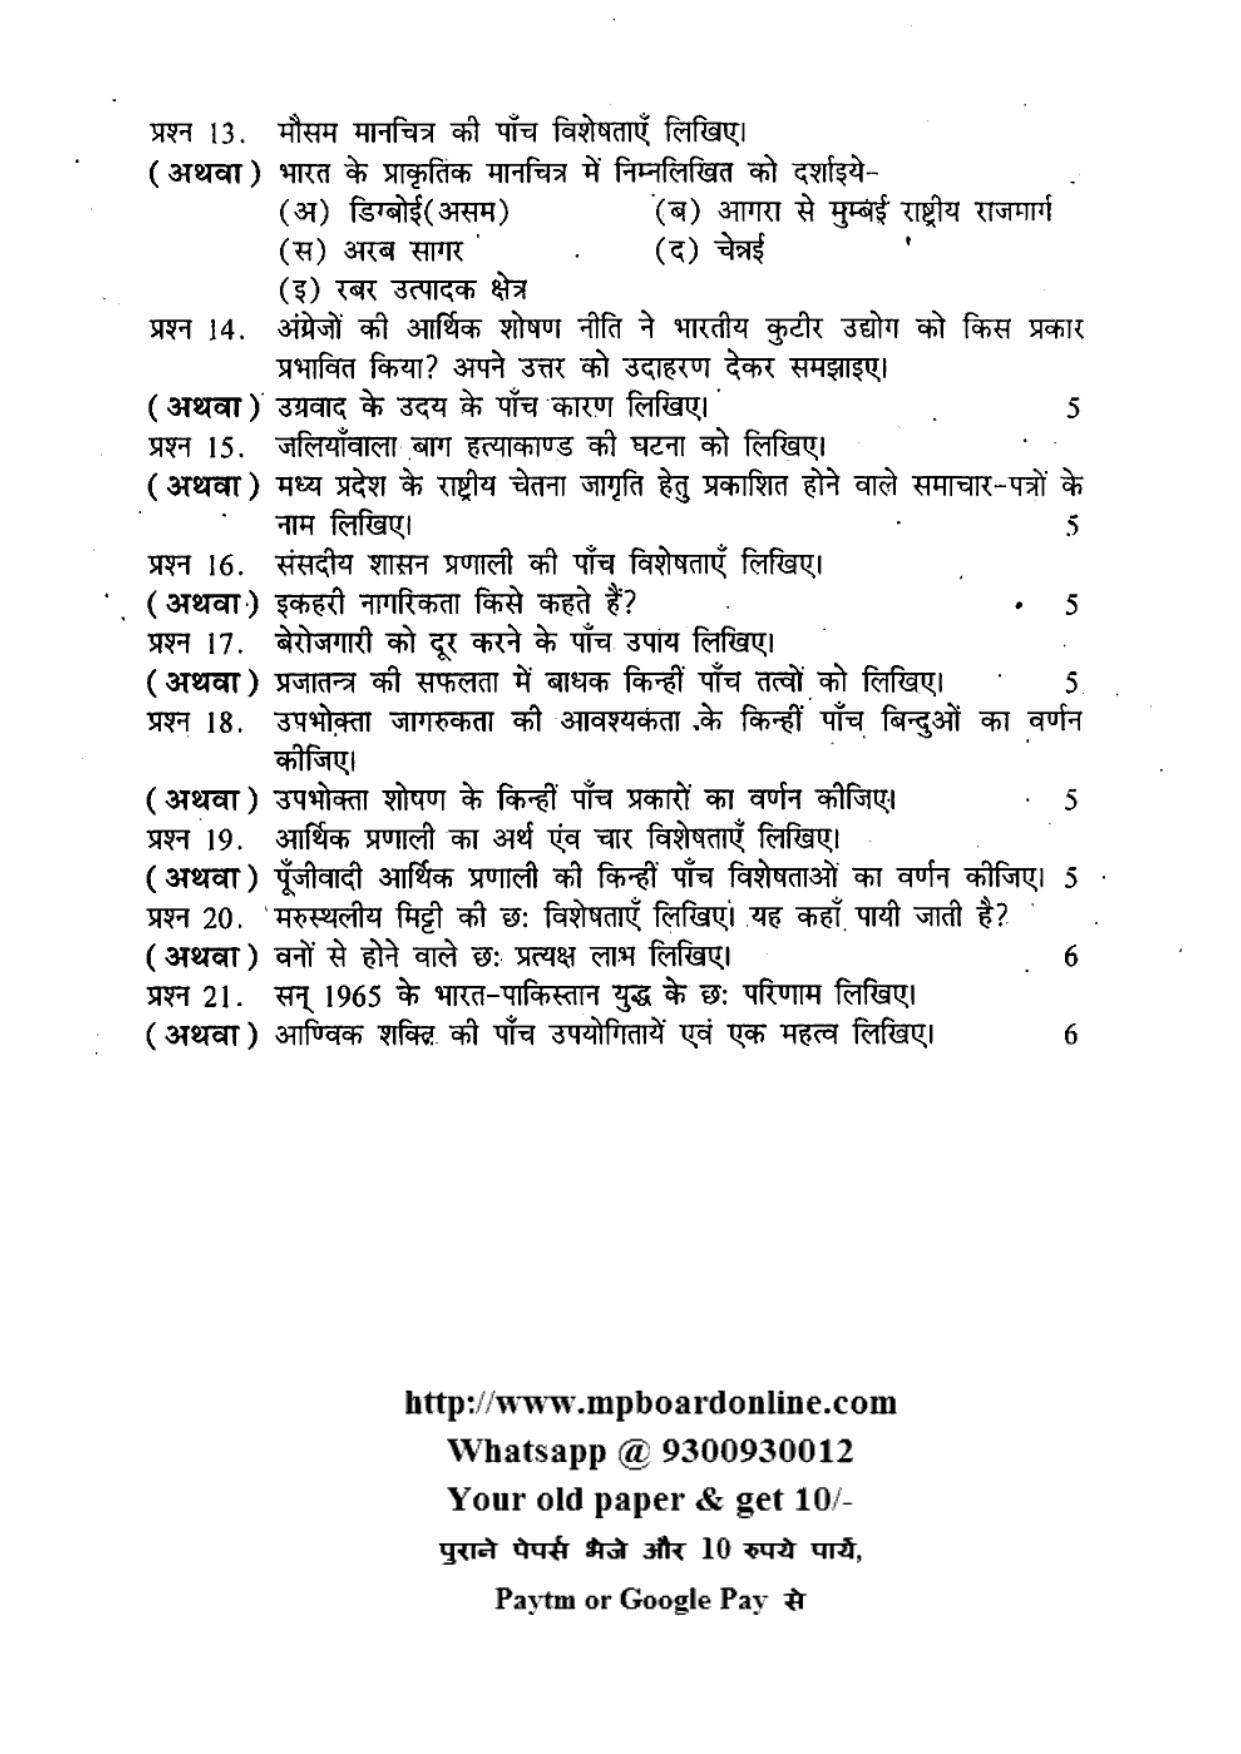 MP Board Class 10 Social Science (Hindi Medium) 2012 Question Paper - Page 3